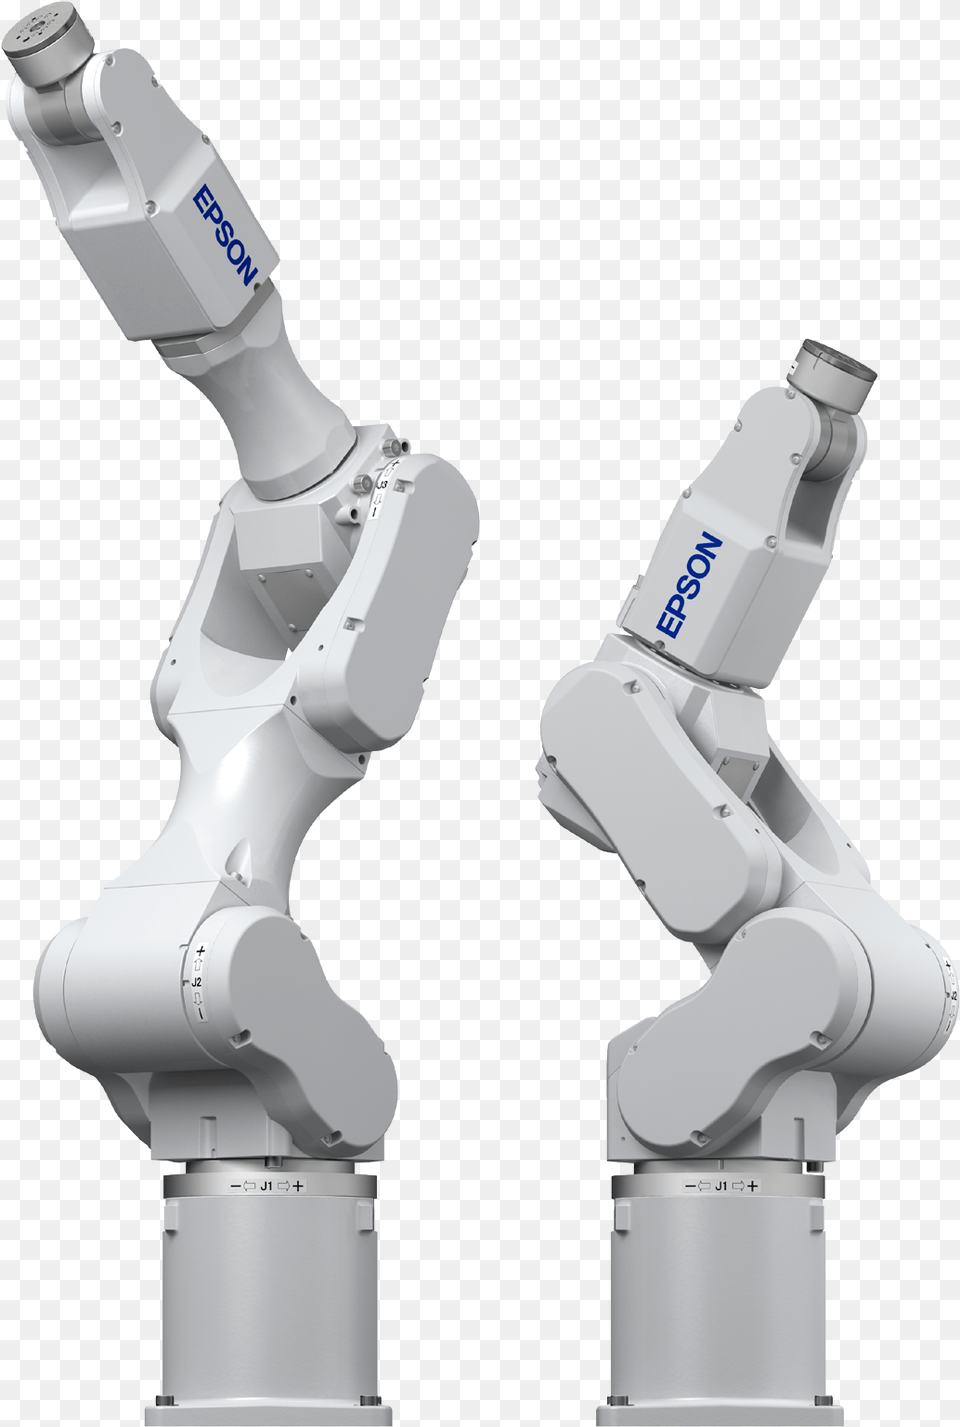 Robot Hand Download Iai 6 Axis Robot Free Png